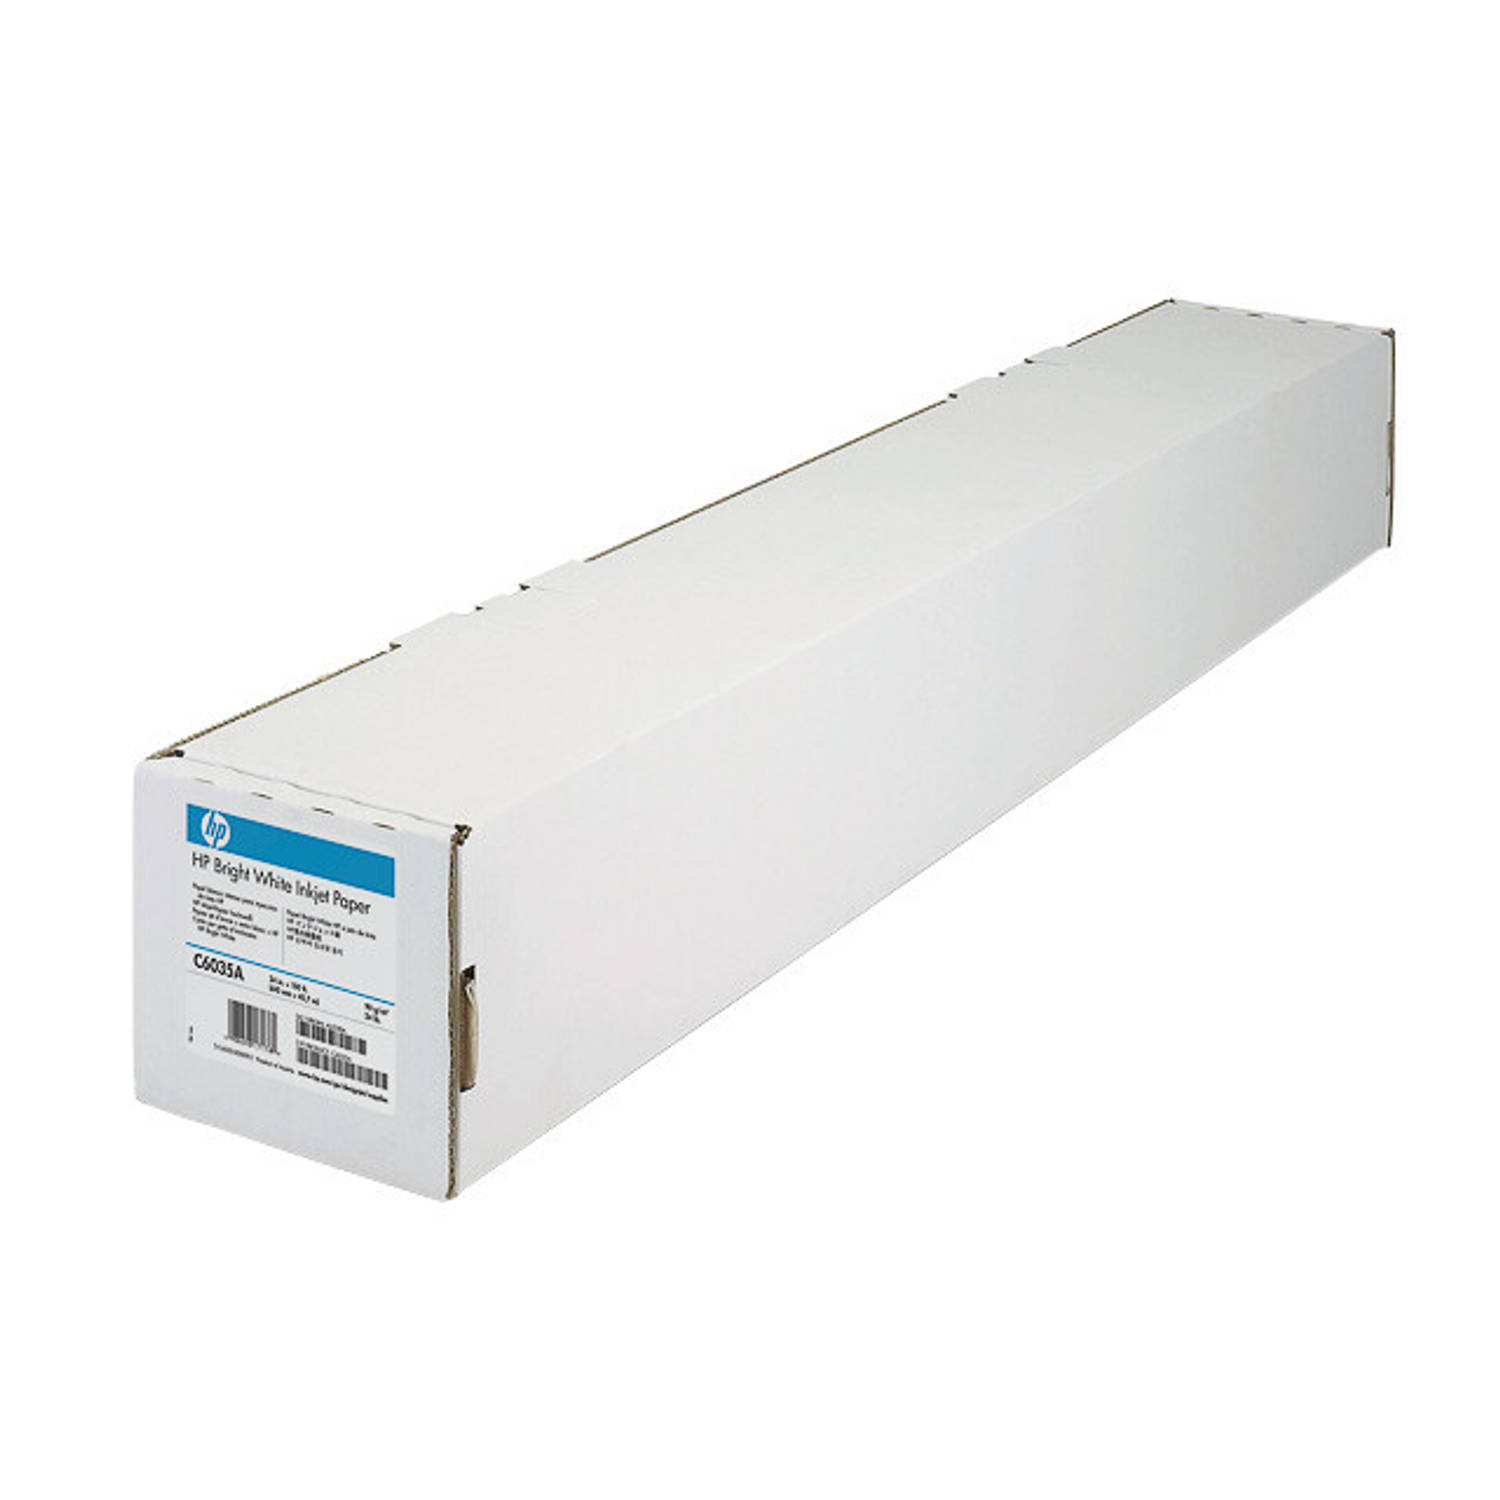 HP Bright White Inkjet papier 914 mm x 45.7 m, 90 g-m, Mat, Houtvezel (C6036A)